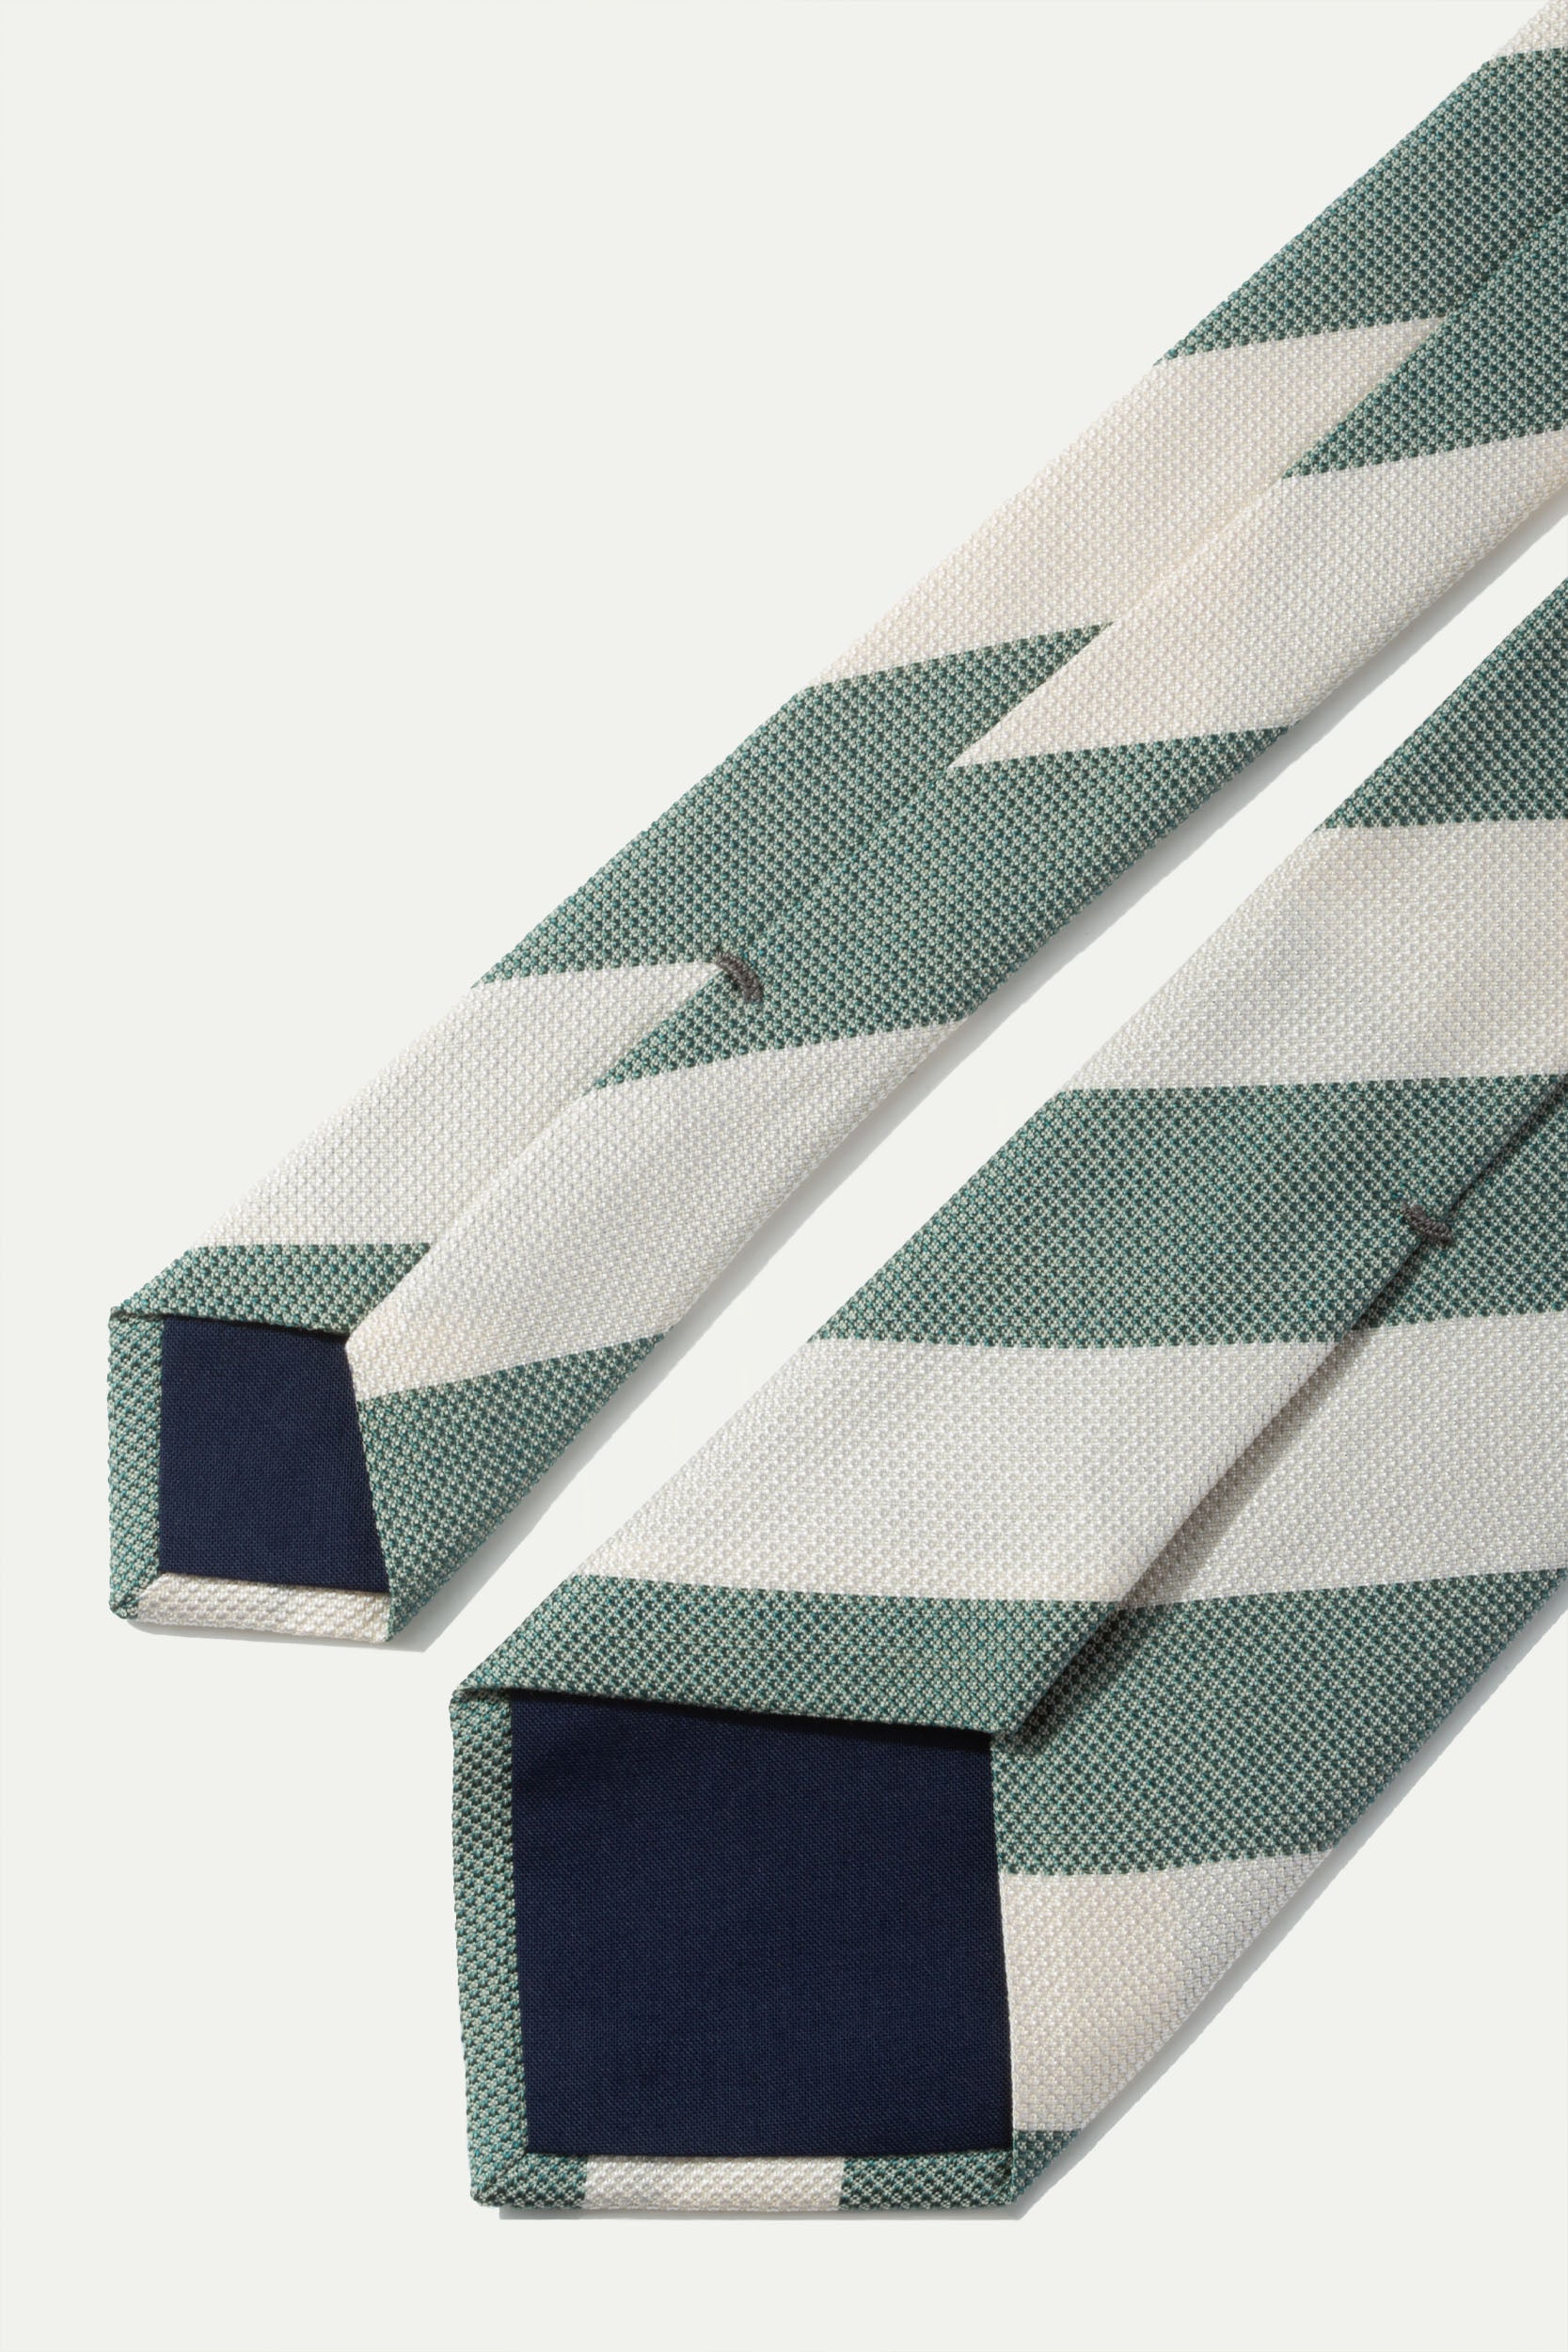 Cravate en soie à rayures vertes - Made In Italy